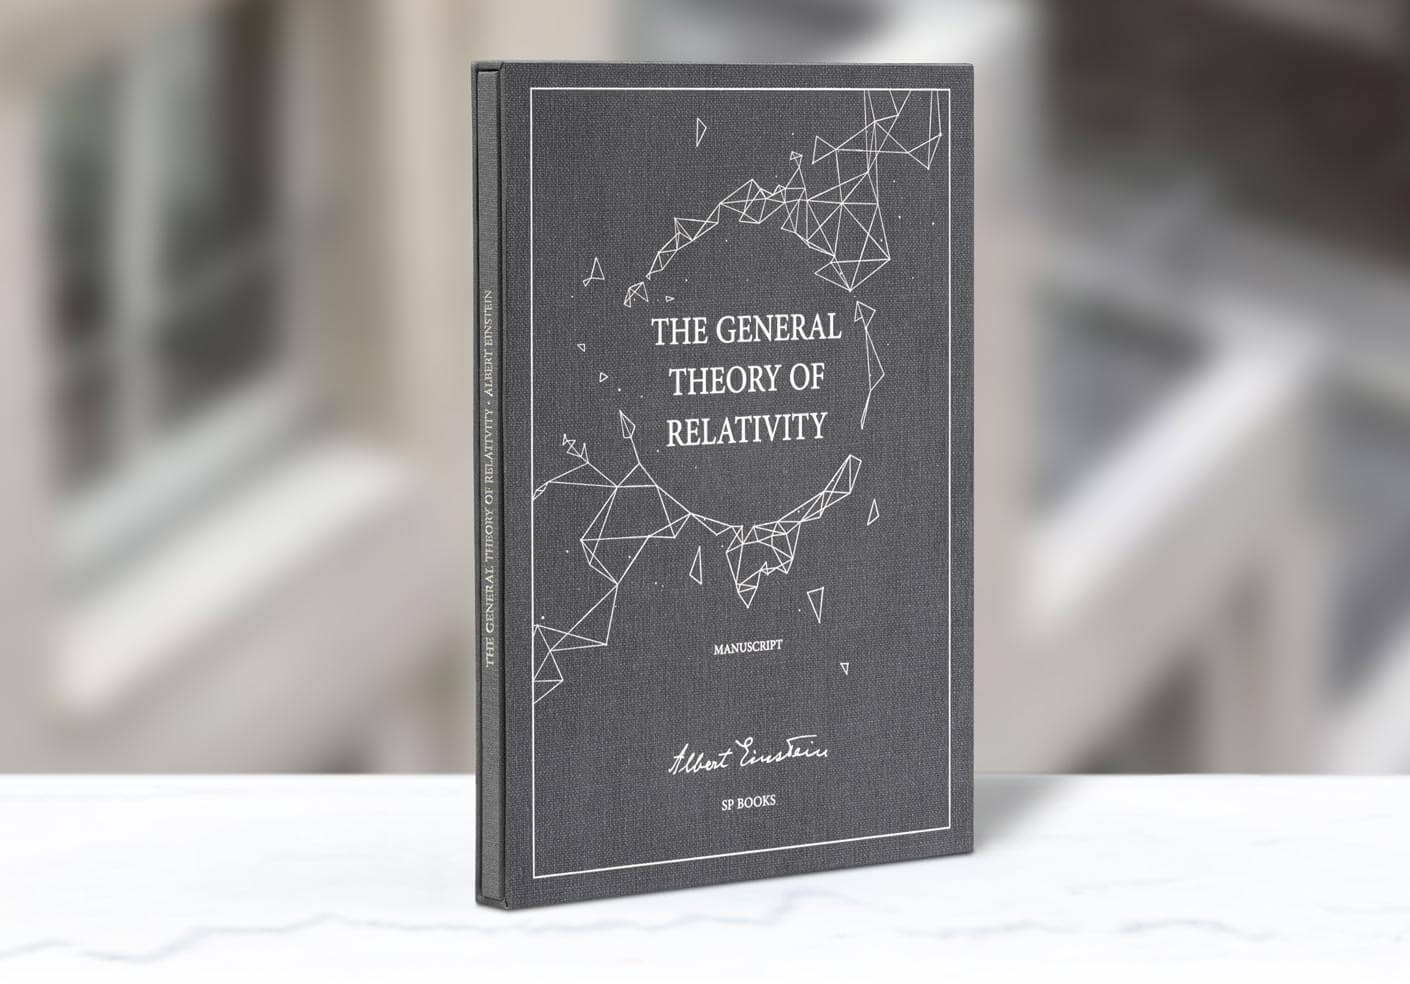 The General Theory of Relativity manuscript by Albert Einstein